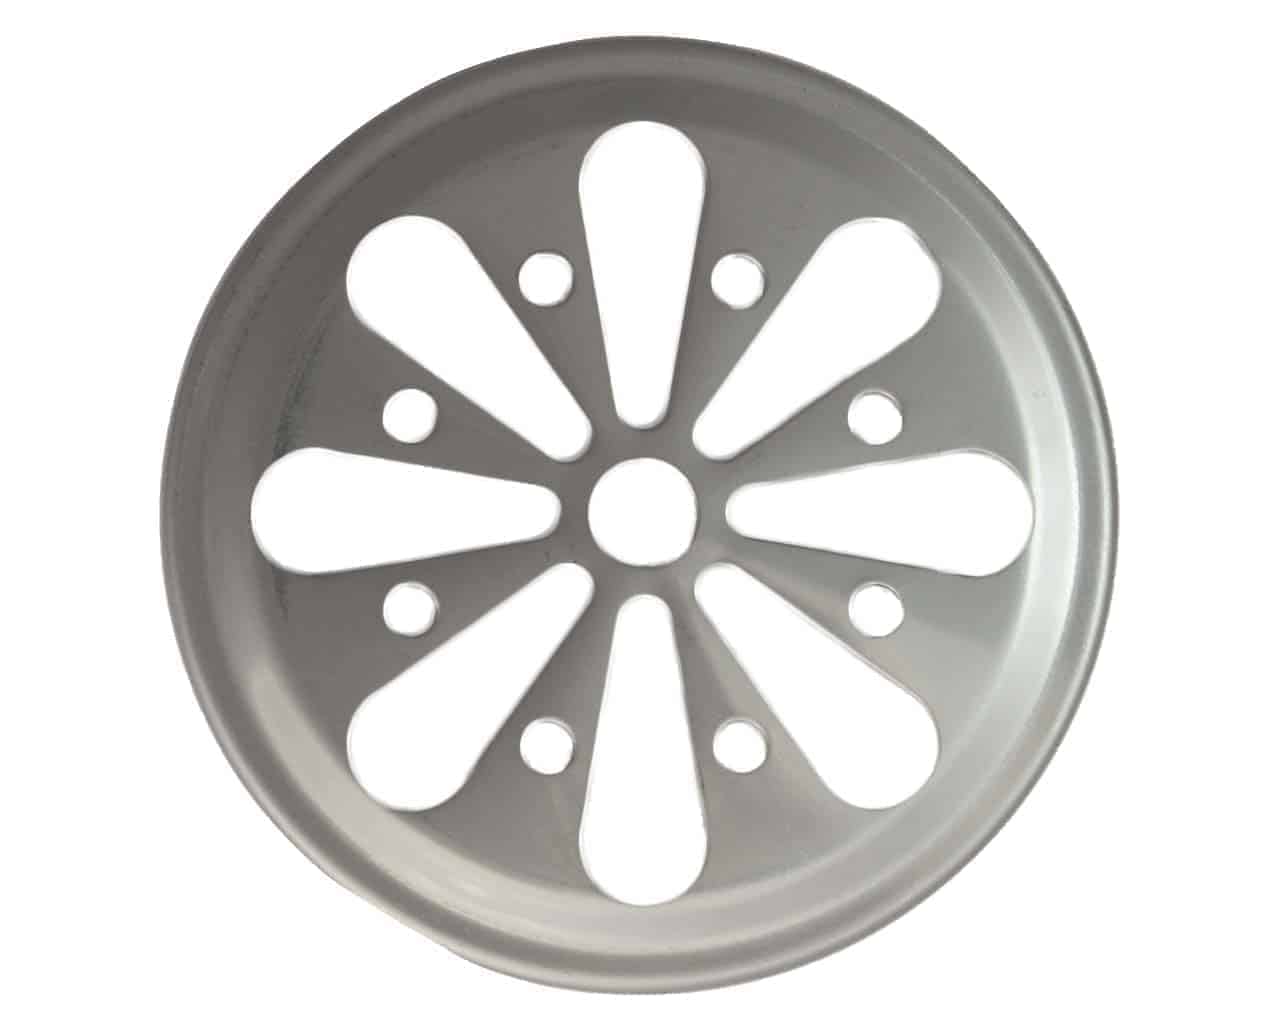 Stainless steel daisy cut lid insert for regular mouth Mason jars